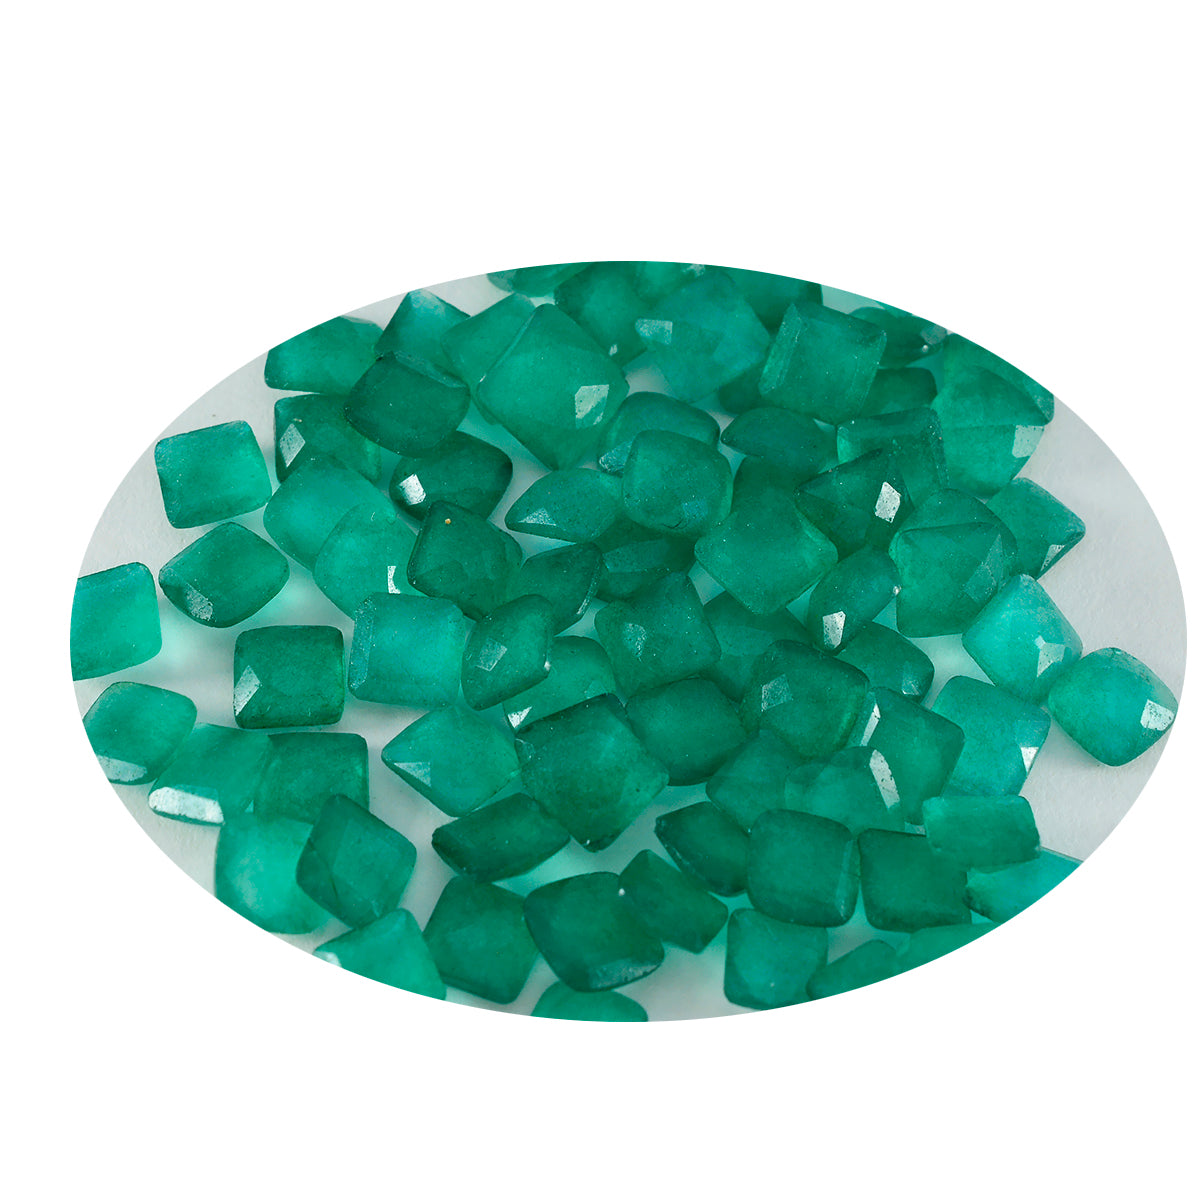 riyogems 1 шт., натуральная зеленая яшма, граненые 6x6 мм, квадратная форма, милые качественные драгоценные камни